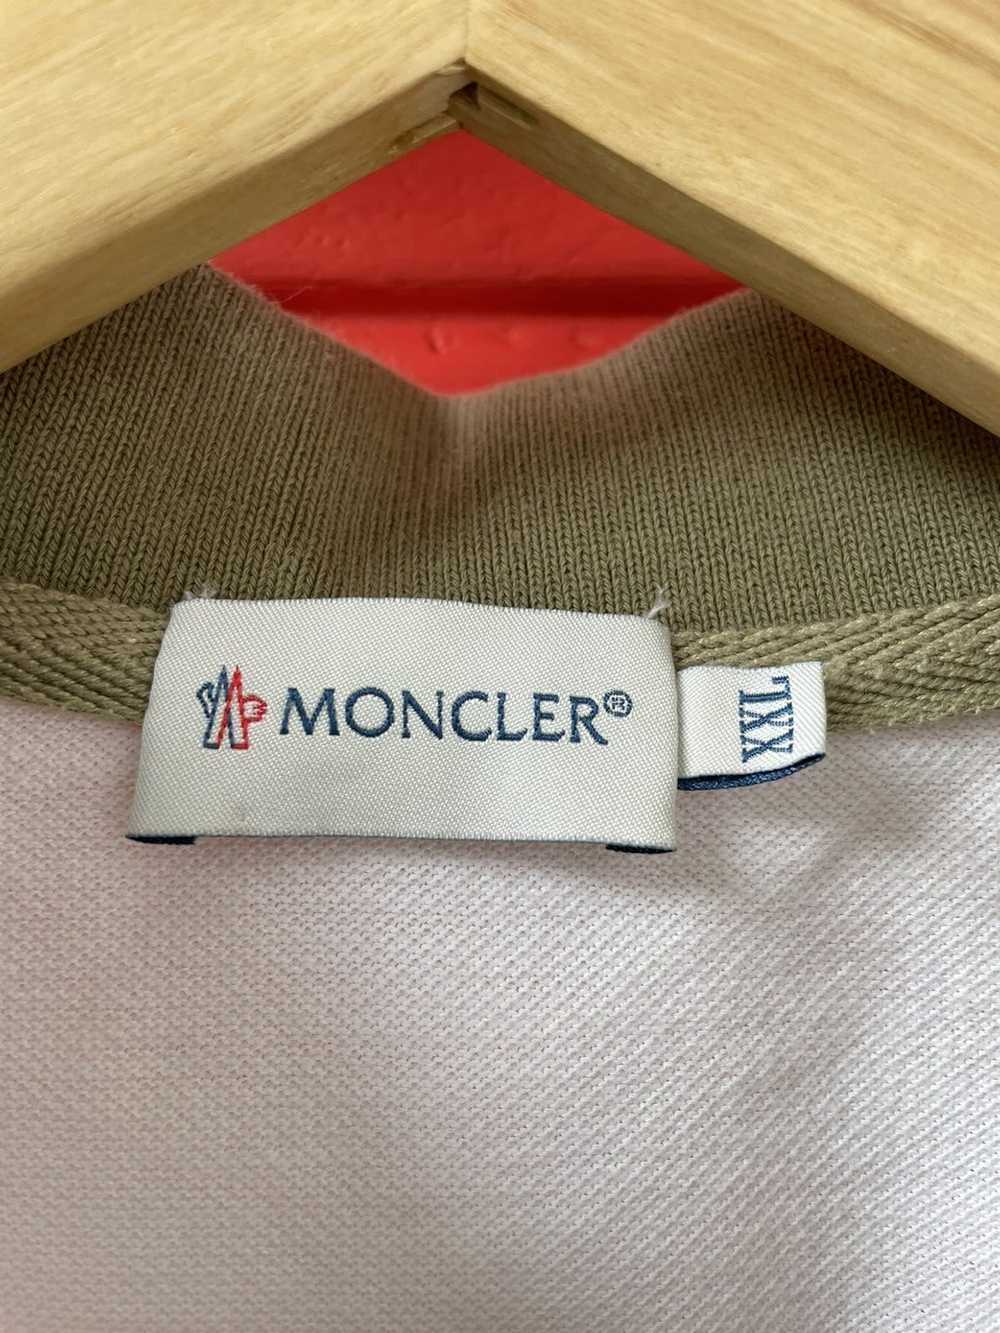 Moncler Moncler Embroidered Polo Shirt - image 5